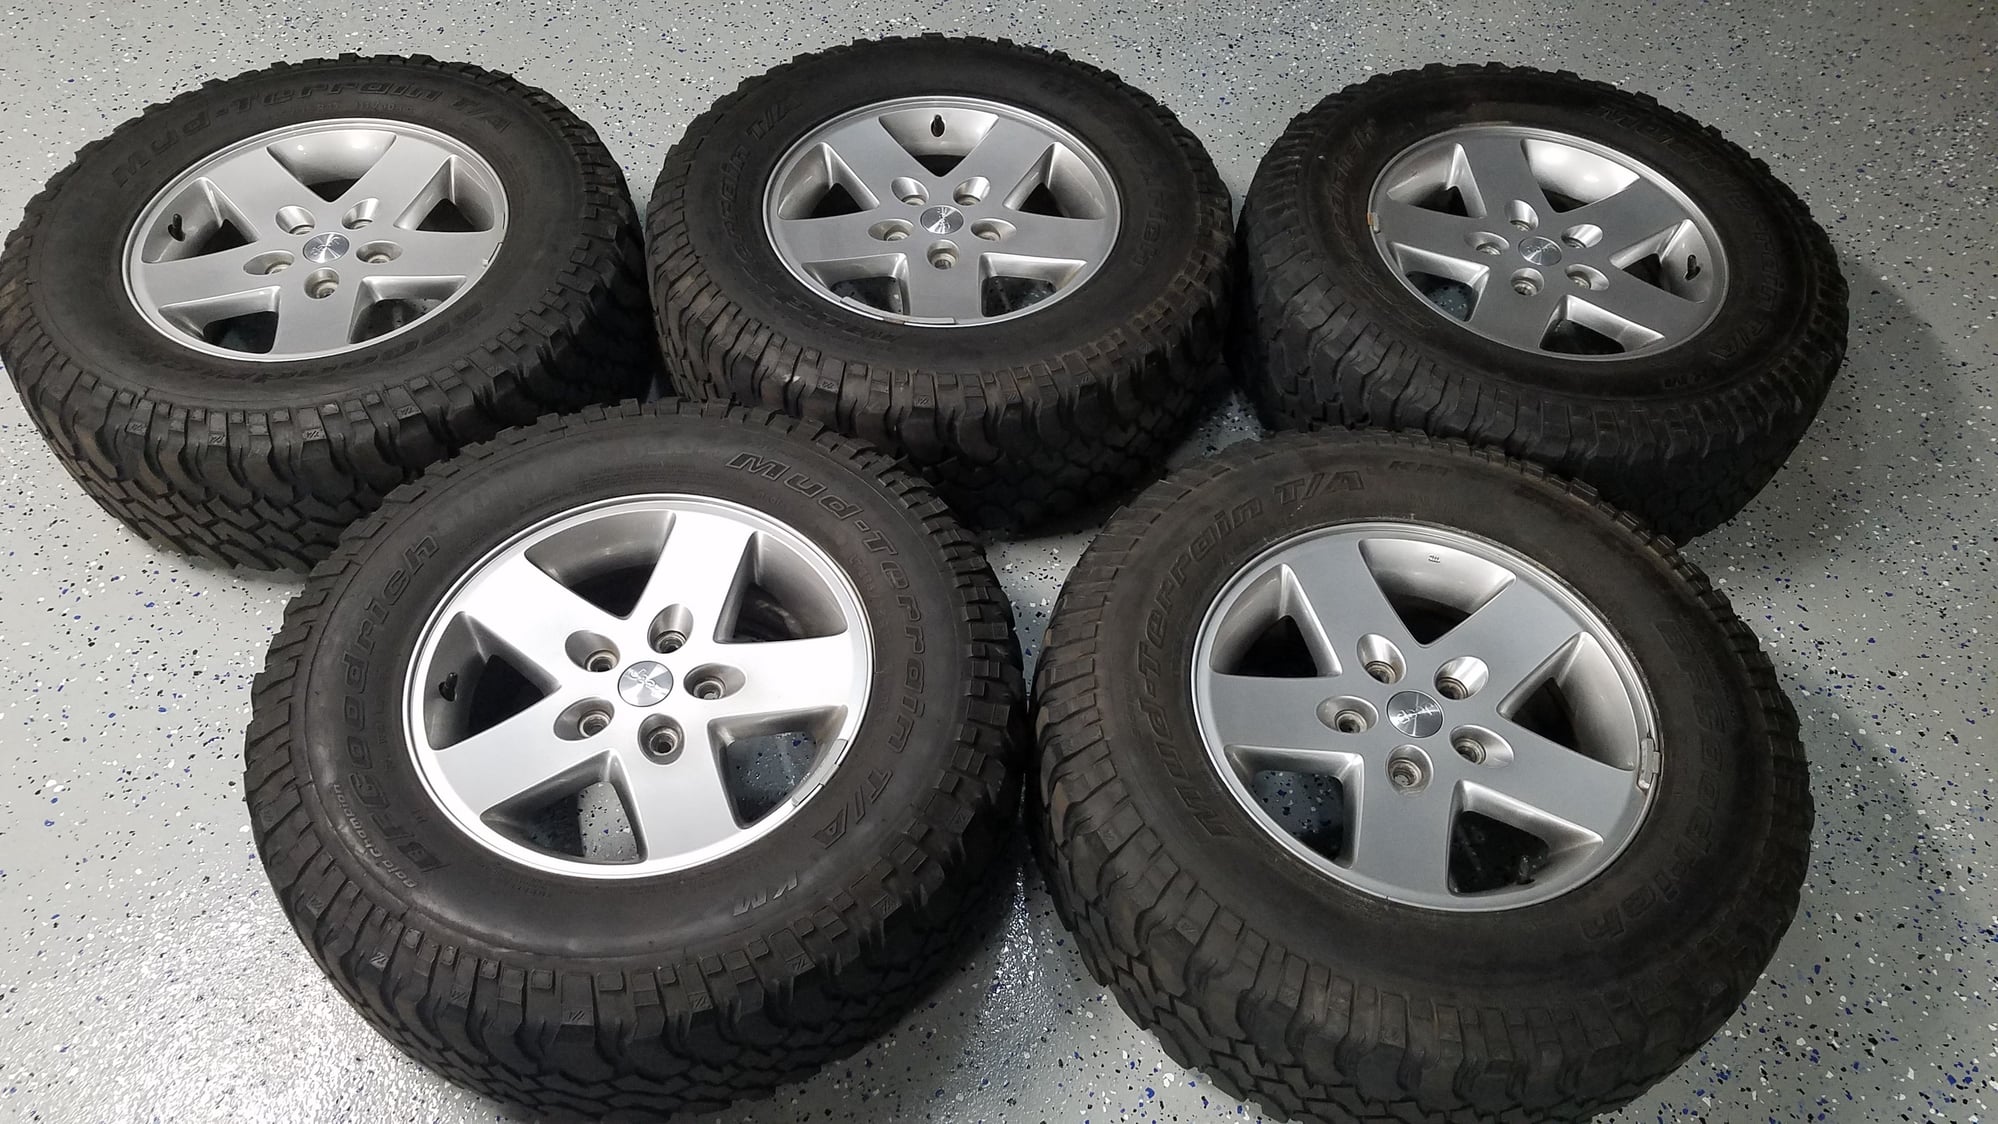 Wheels and Tires/Axles - Stock wheels & BFG Mud Terrain LT255/75R17 - NJ - Used - 2007 to 2017 Jeep Wrangler - West Milford, NJ 07421, United States